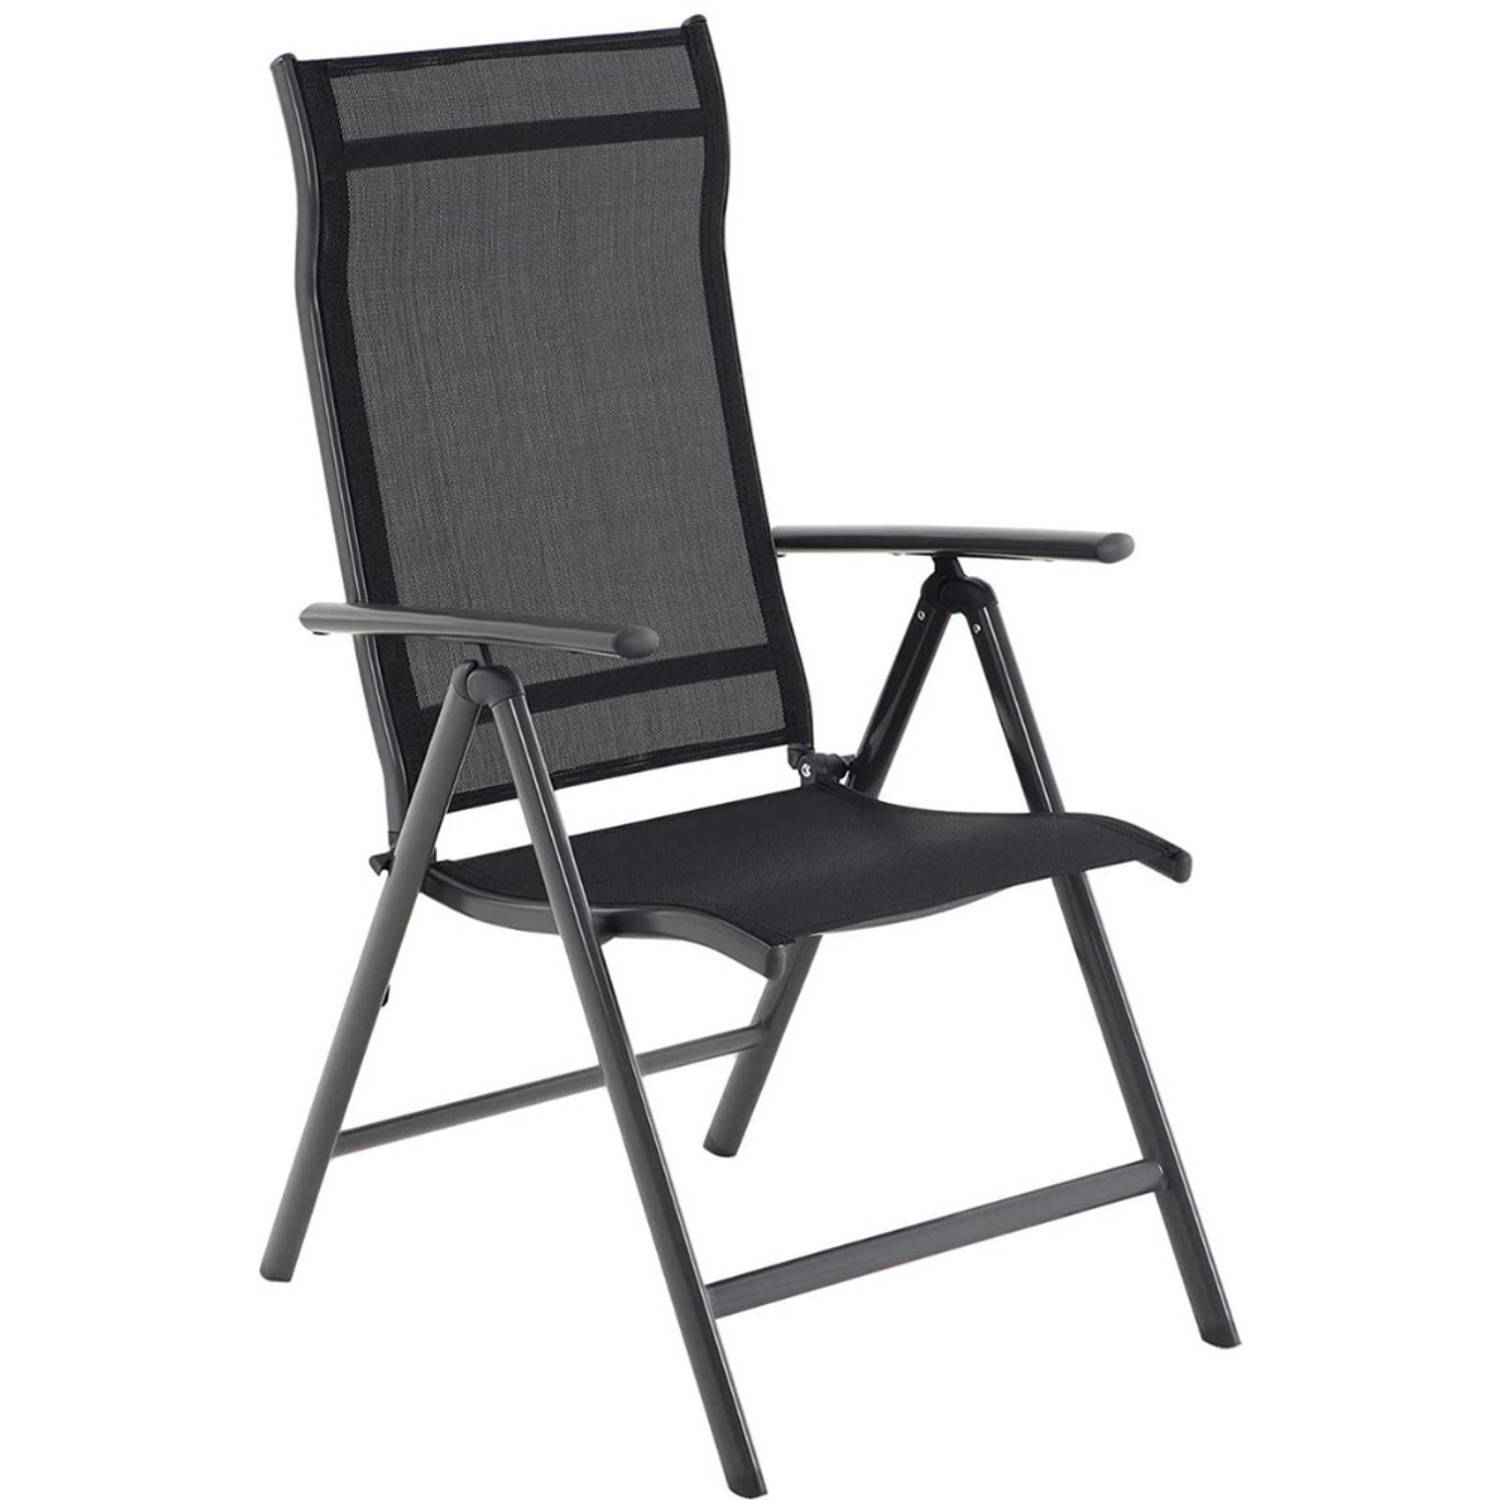 Opvouwbare Klapstoel in stevig aluminium - verstelbare rugleuning - draagt tot 150 kg - Zwart